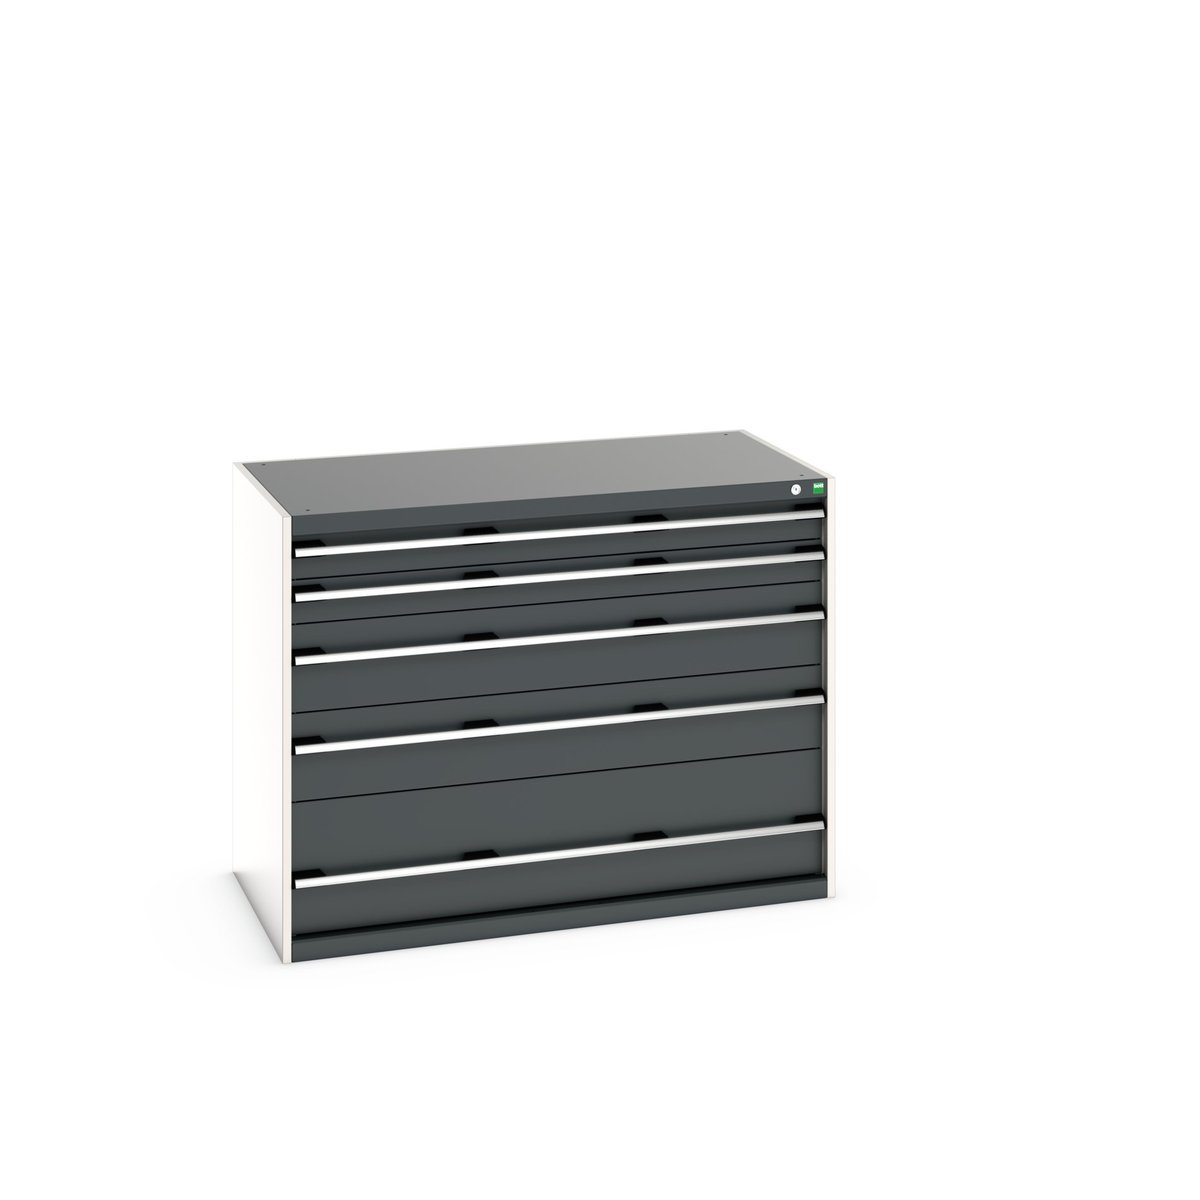 40030091. - cubio drawer cabinet